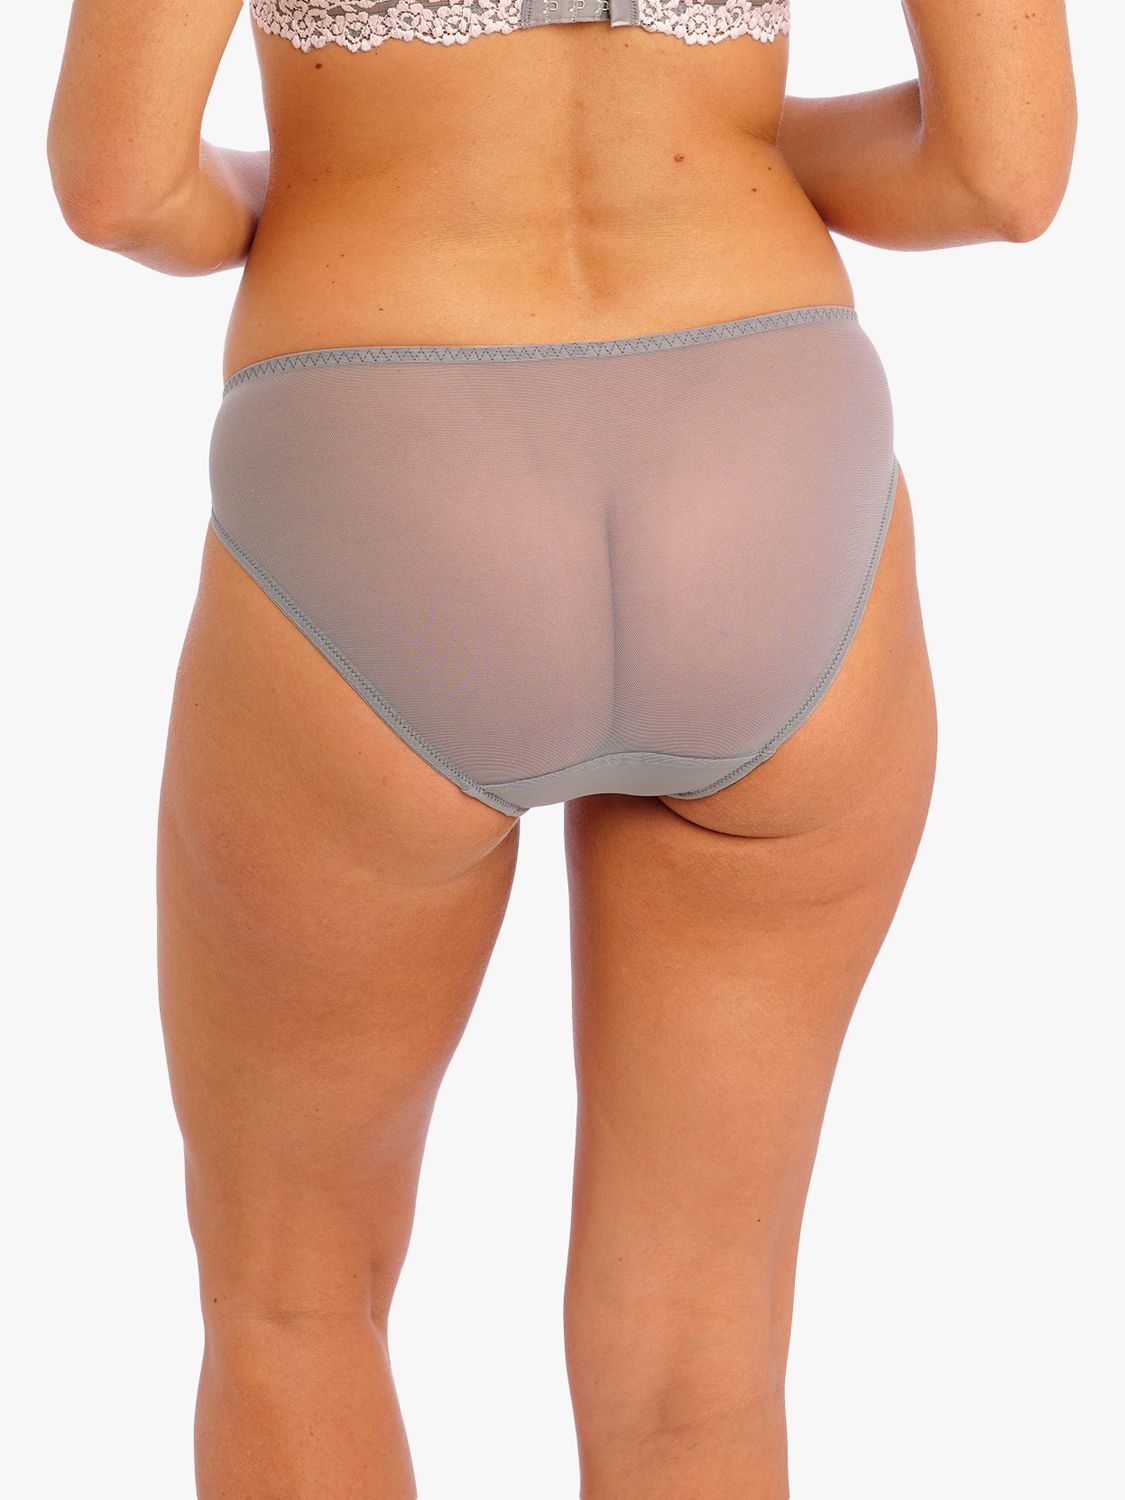 Wacoal Panty pack, comfortable underwear Full figure set, 5 pieces